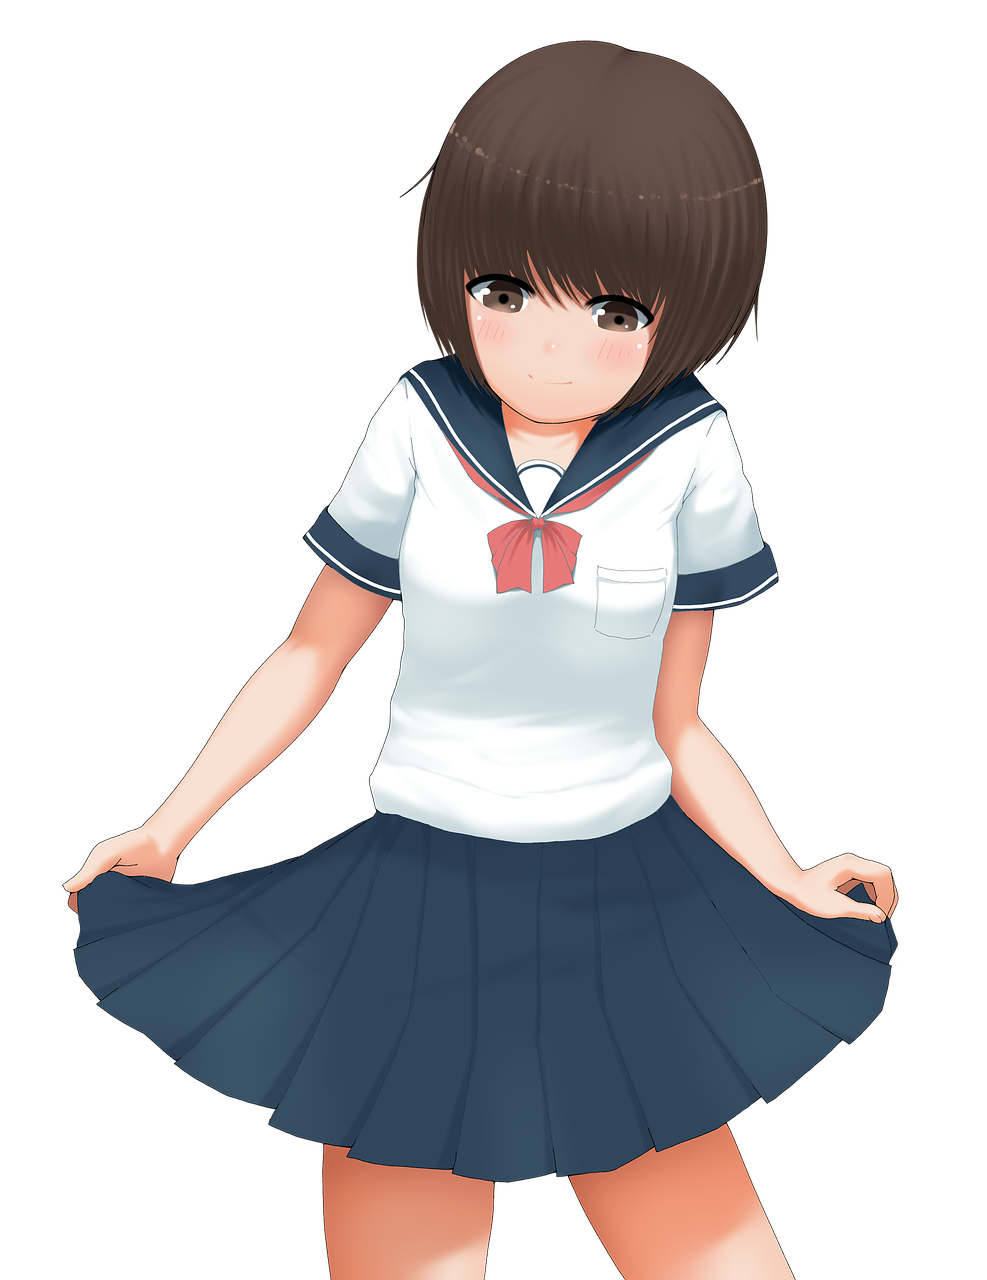 Kawaii Anime Girl PNG Clipart Background